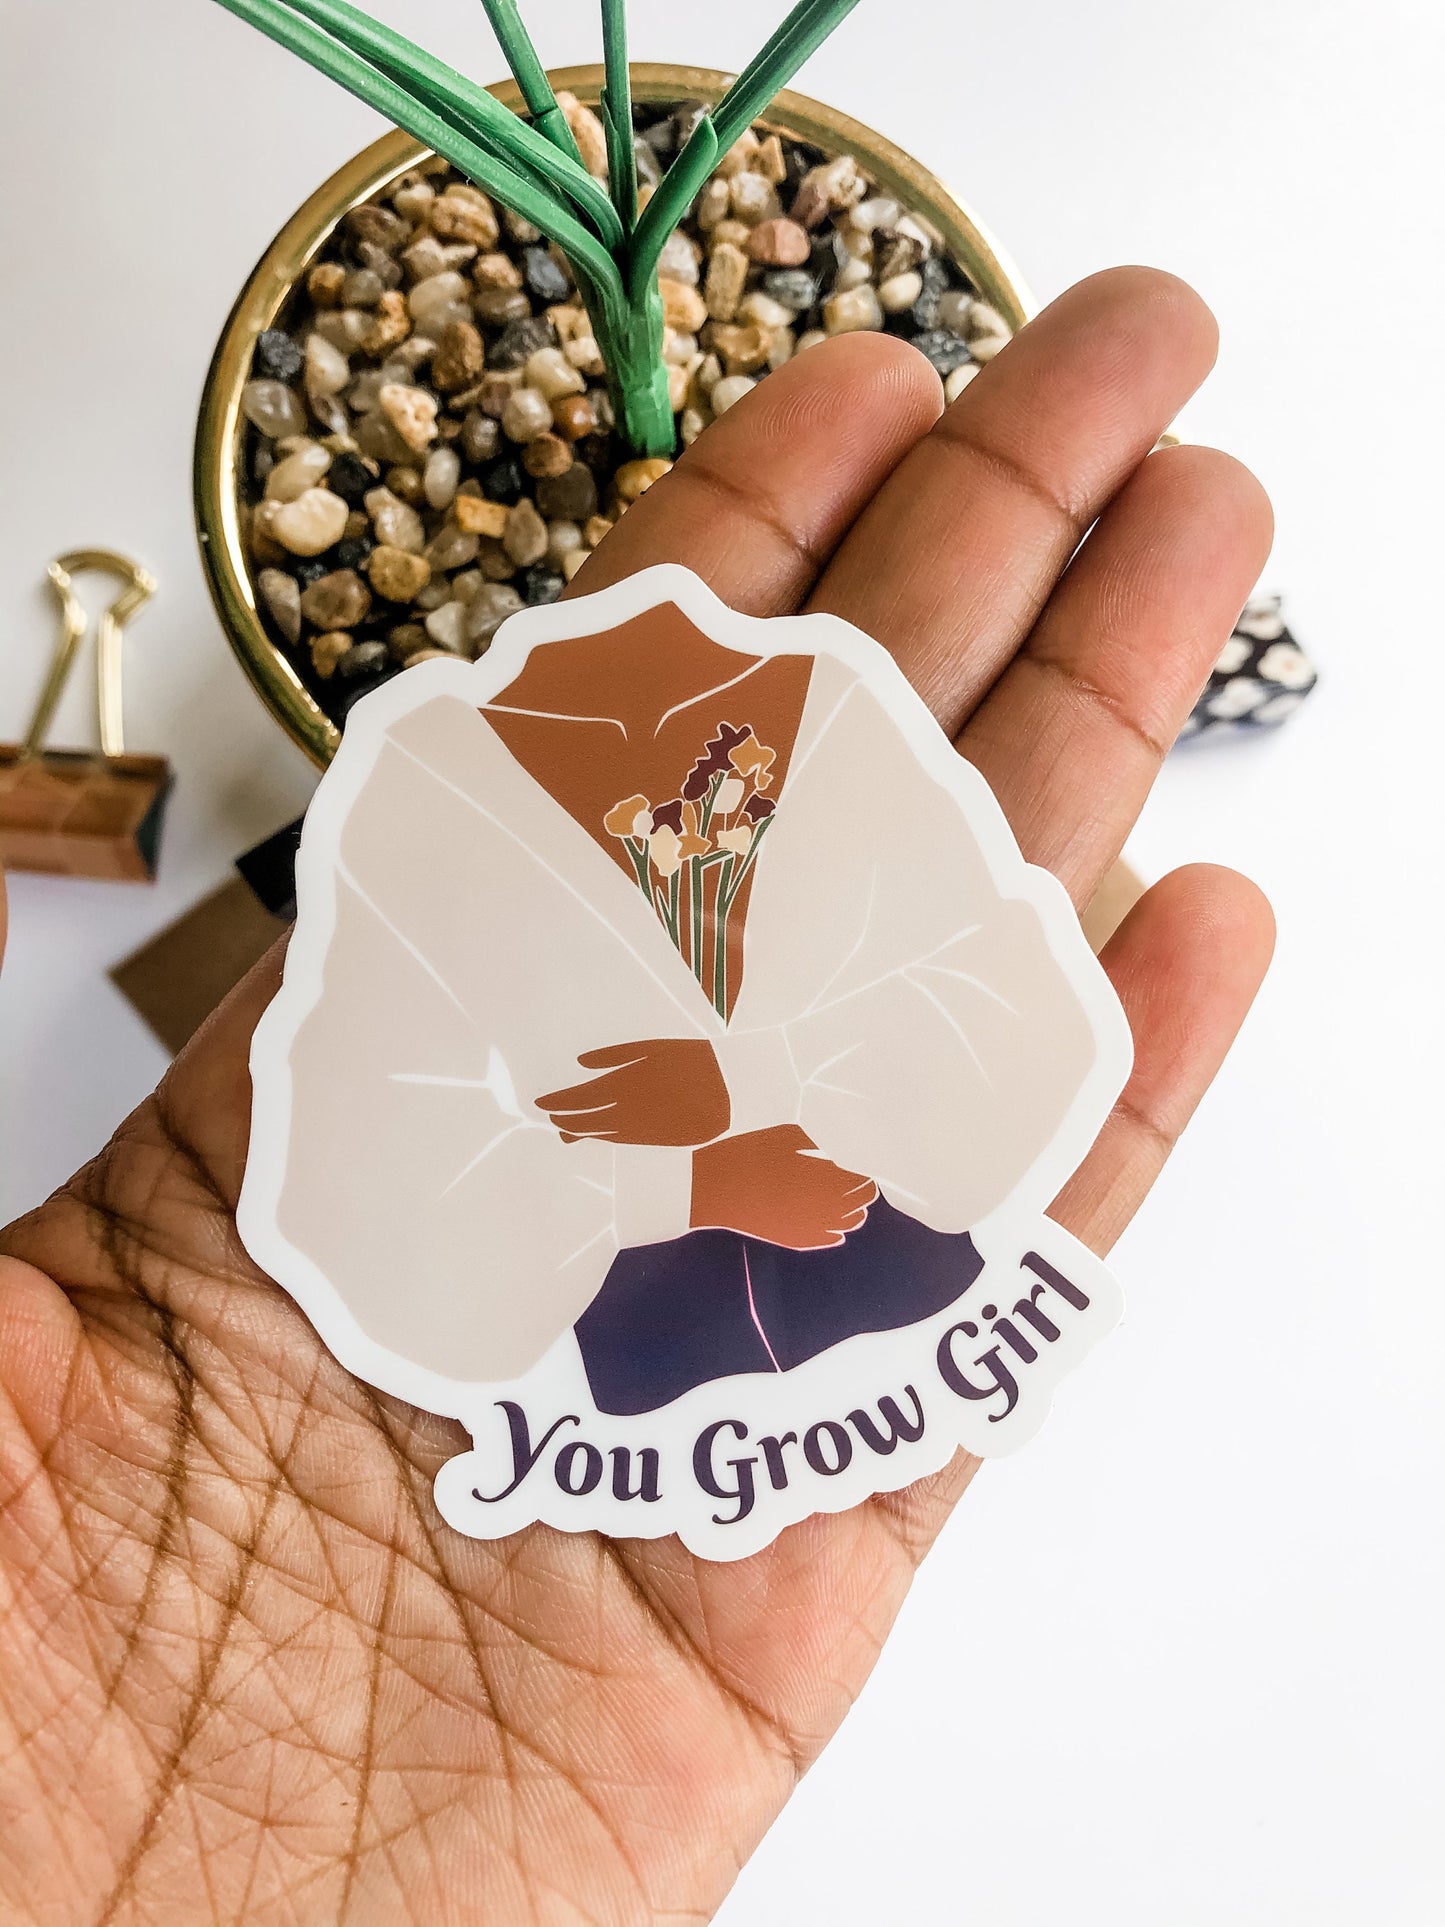 You Grow Girl Vinyl Sticker